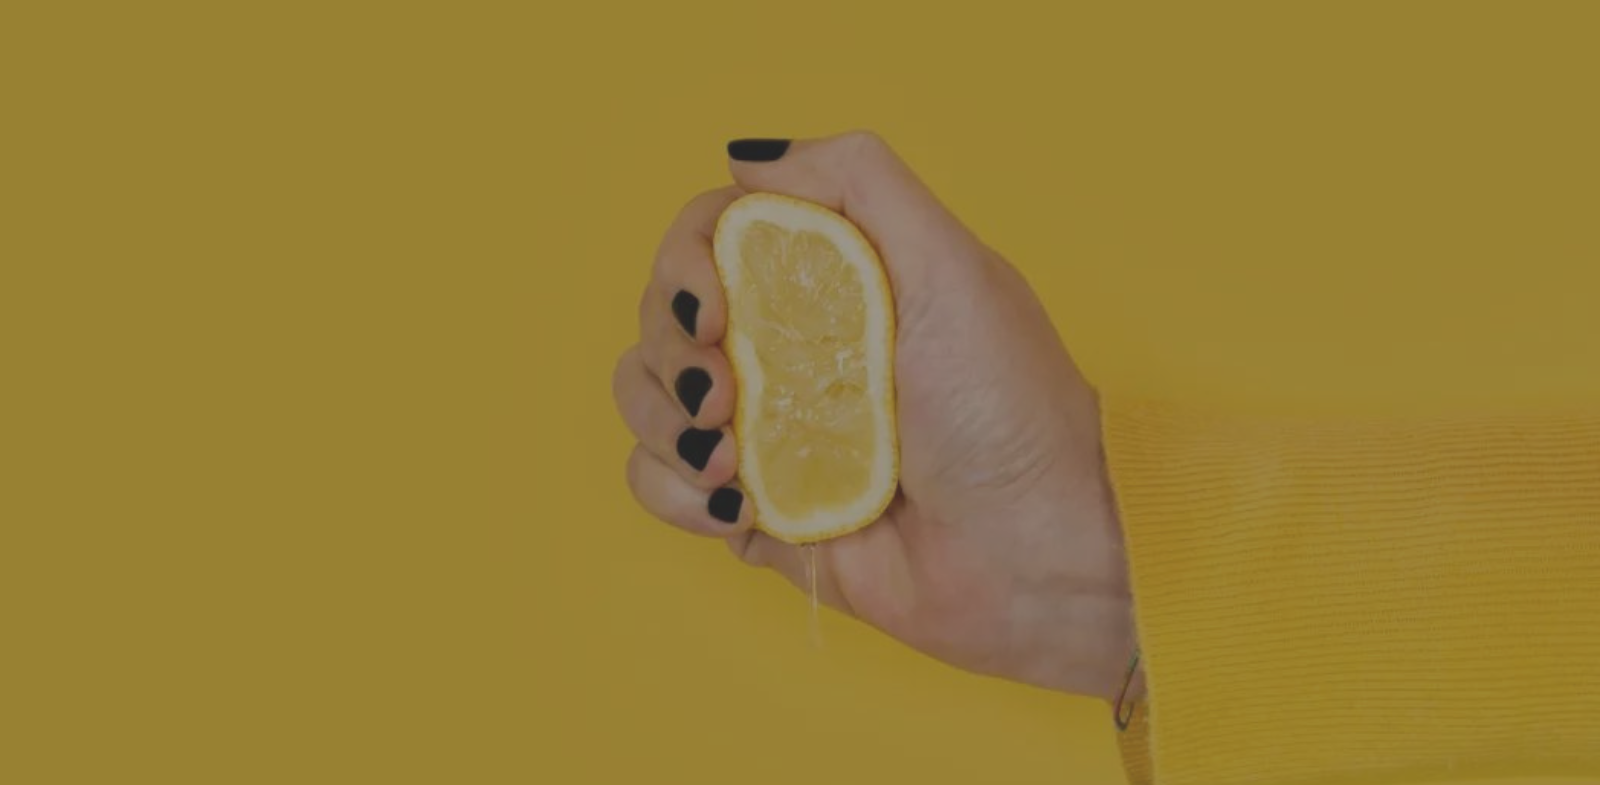 hand squeezing lemon on yellow background